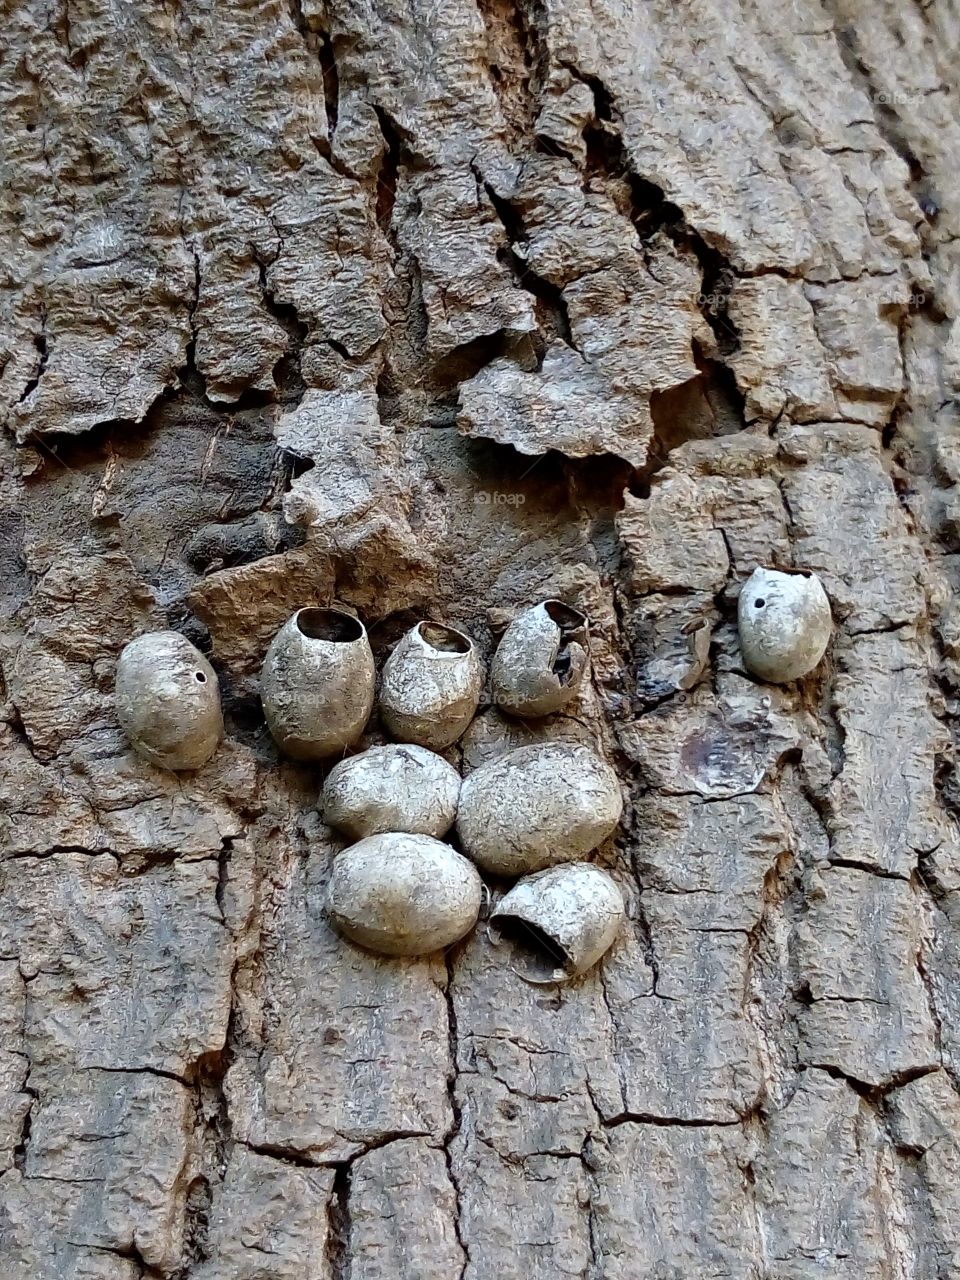 Snail animal shell on tree bark.